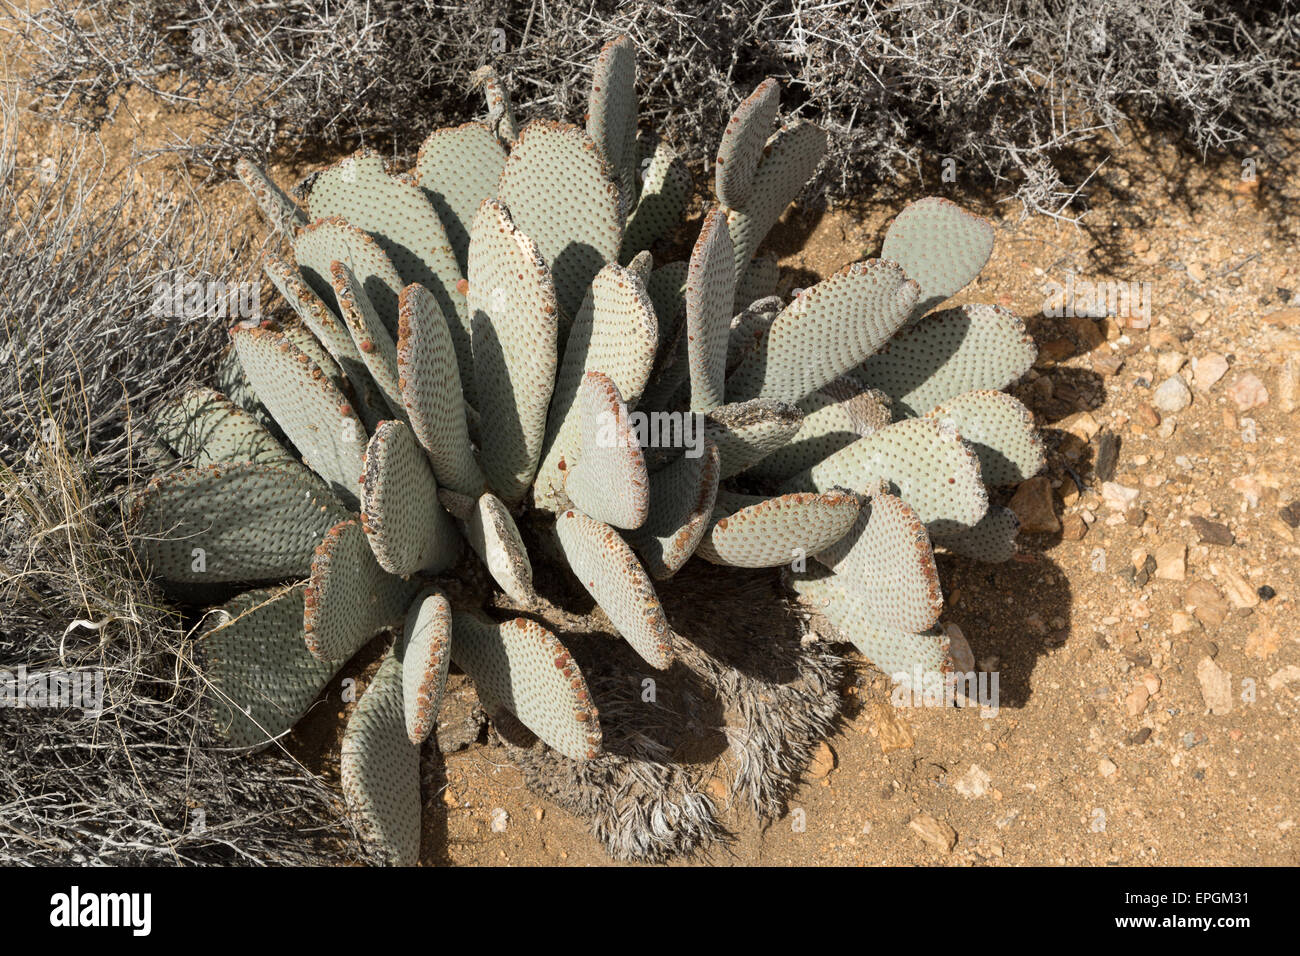 A photograph of some Beavertail Cactus (Opuntia basilaris) in the Joshua Tree National Park, in California, USA. Stock Photo